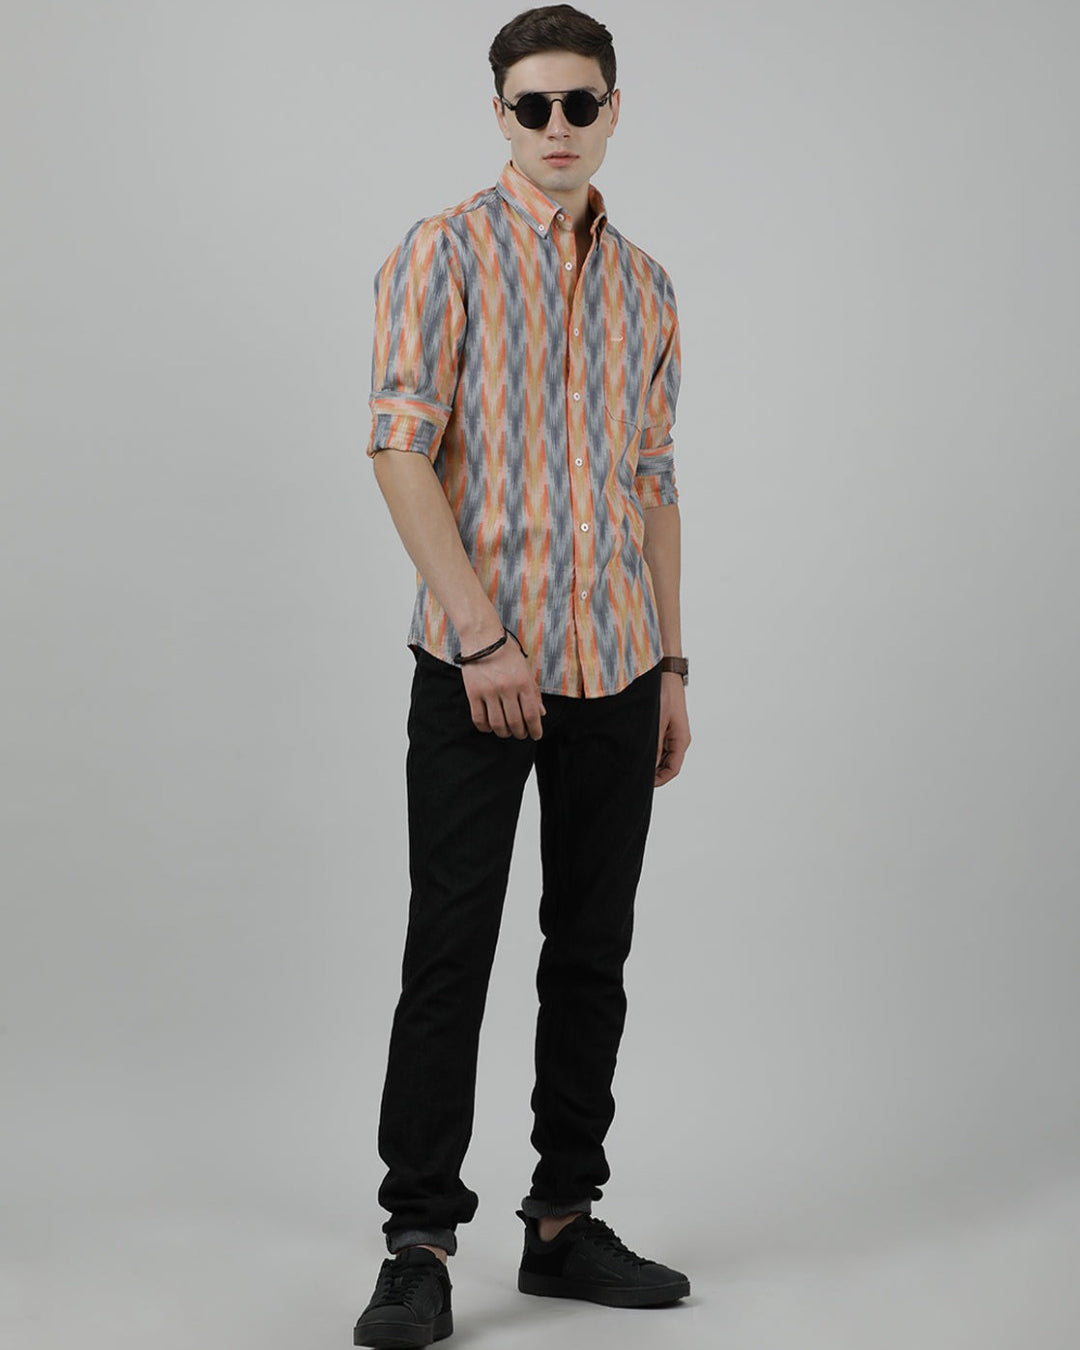 Crocodile Casual Full Sleeve Slim Fit Stripe Shirt Orange for Men